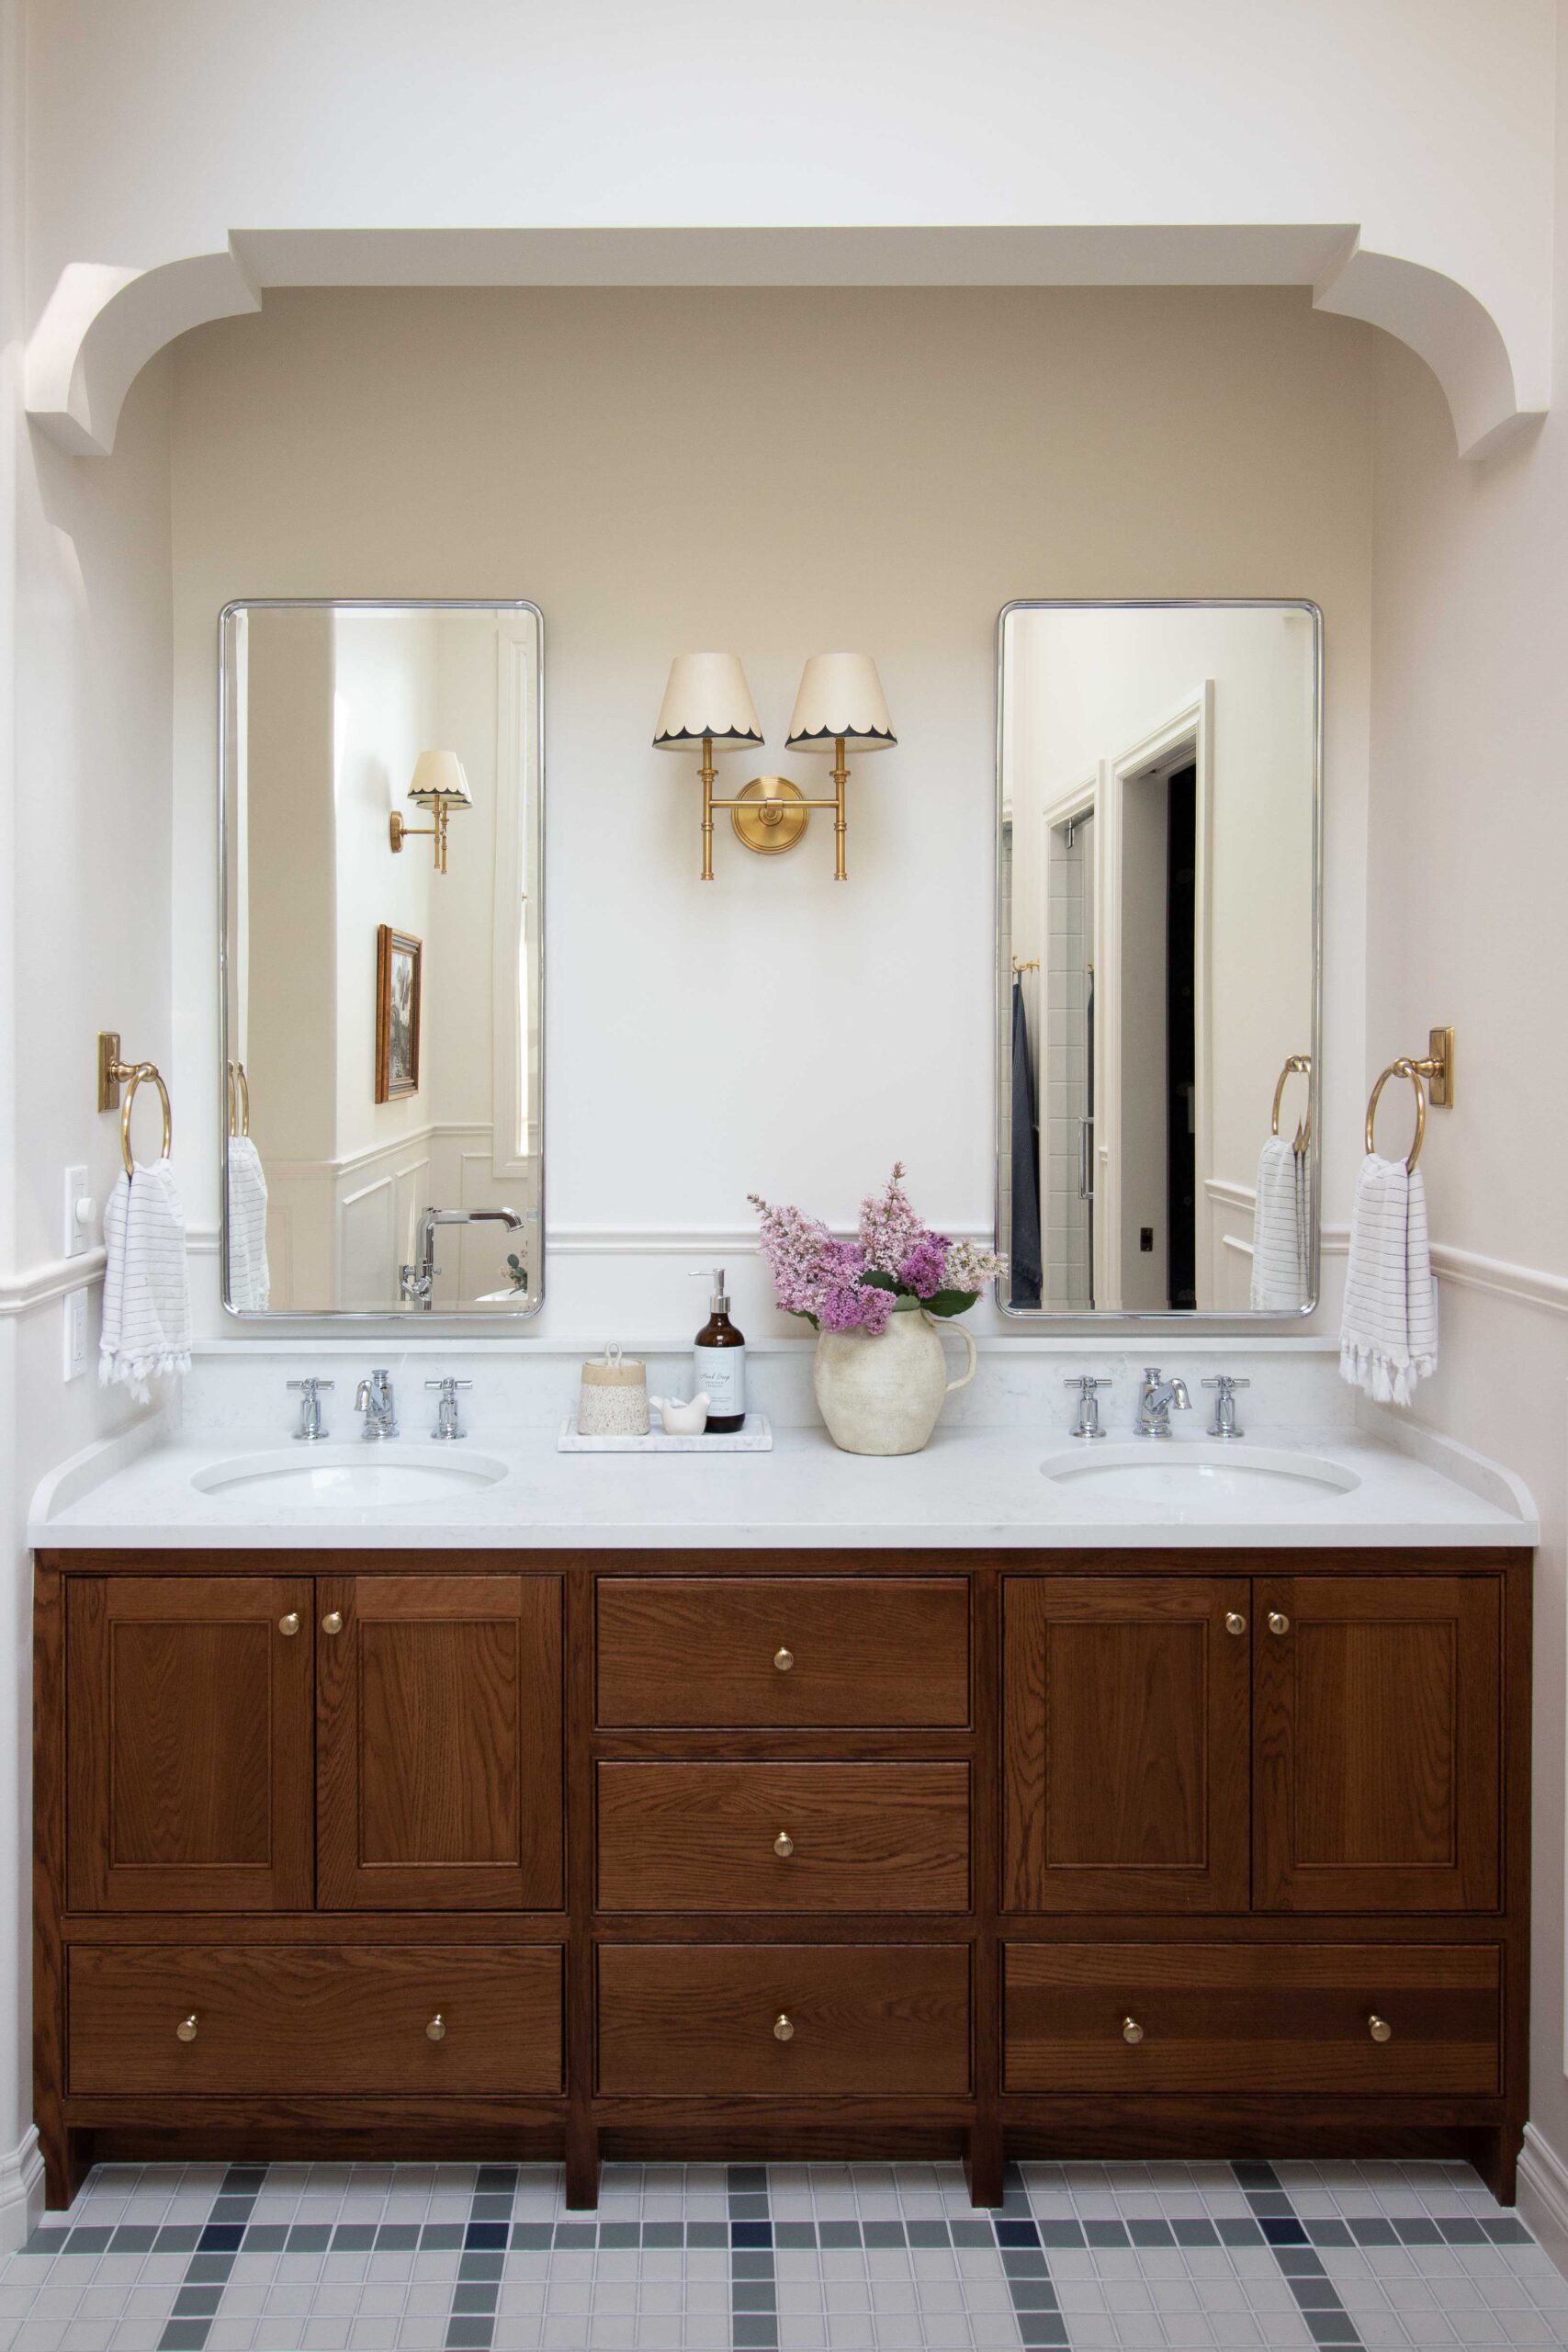 A DIY Bathroom Makeover – The Ensuite Remodel Reveal